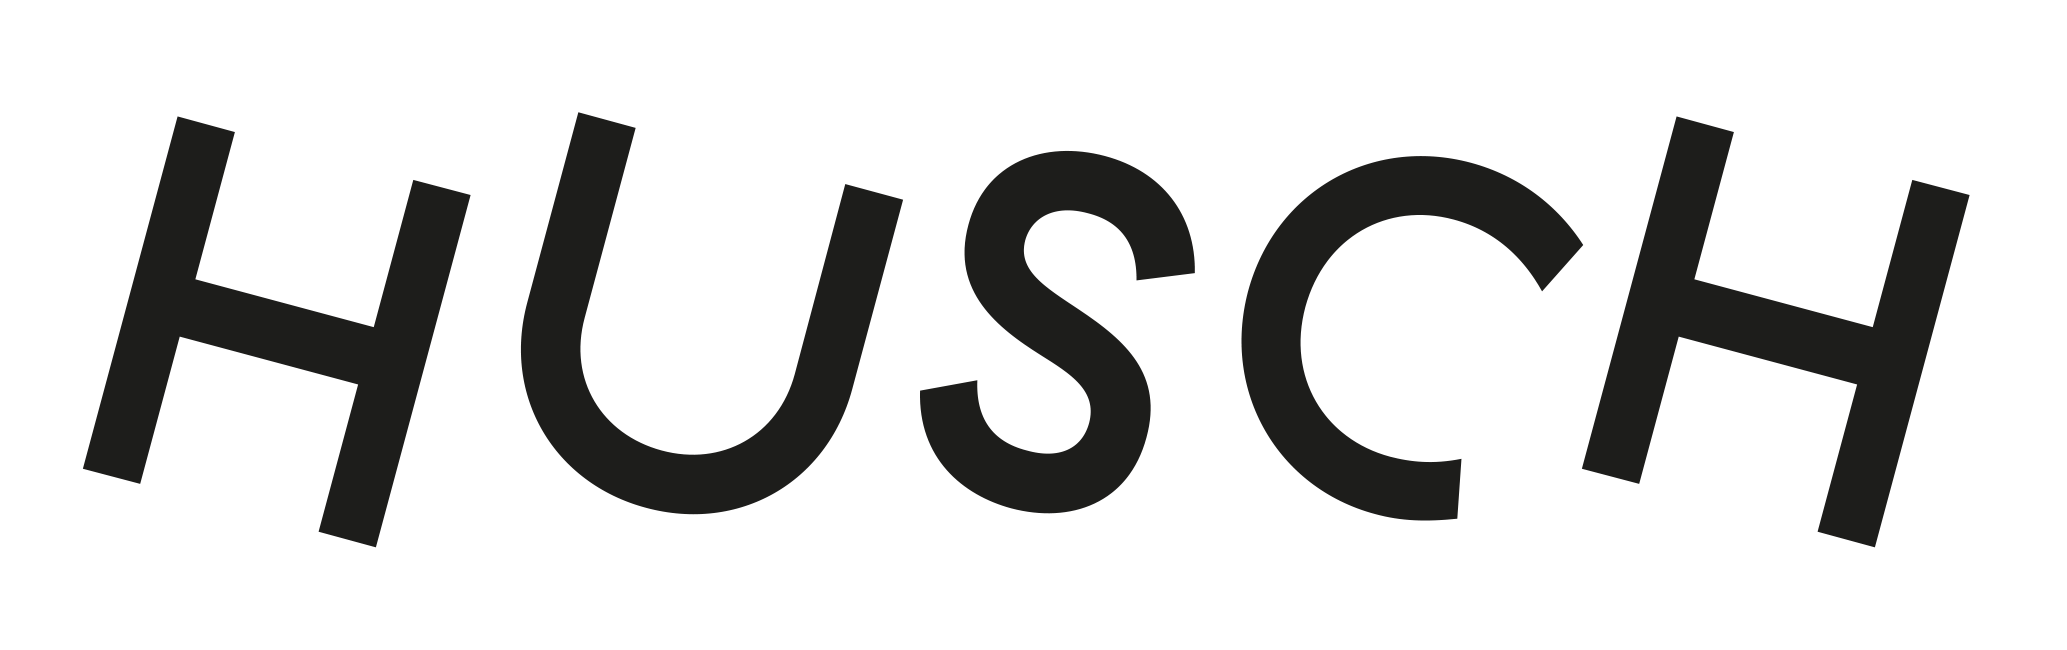 HUSCH logo animation